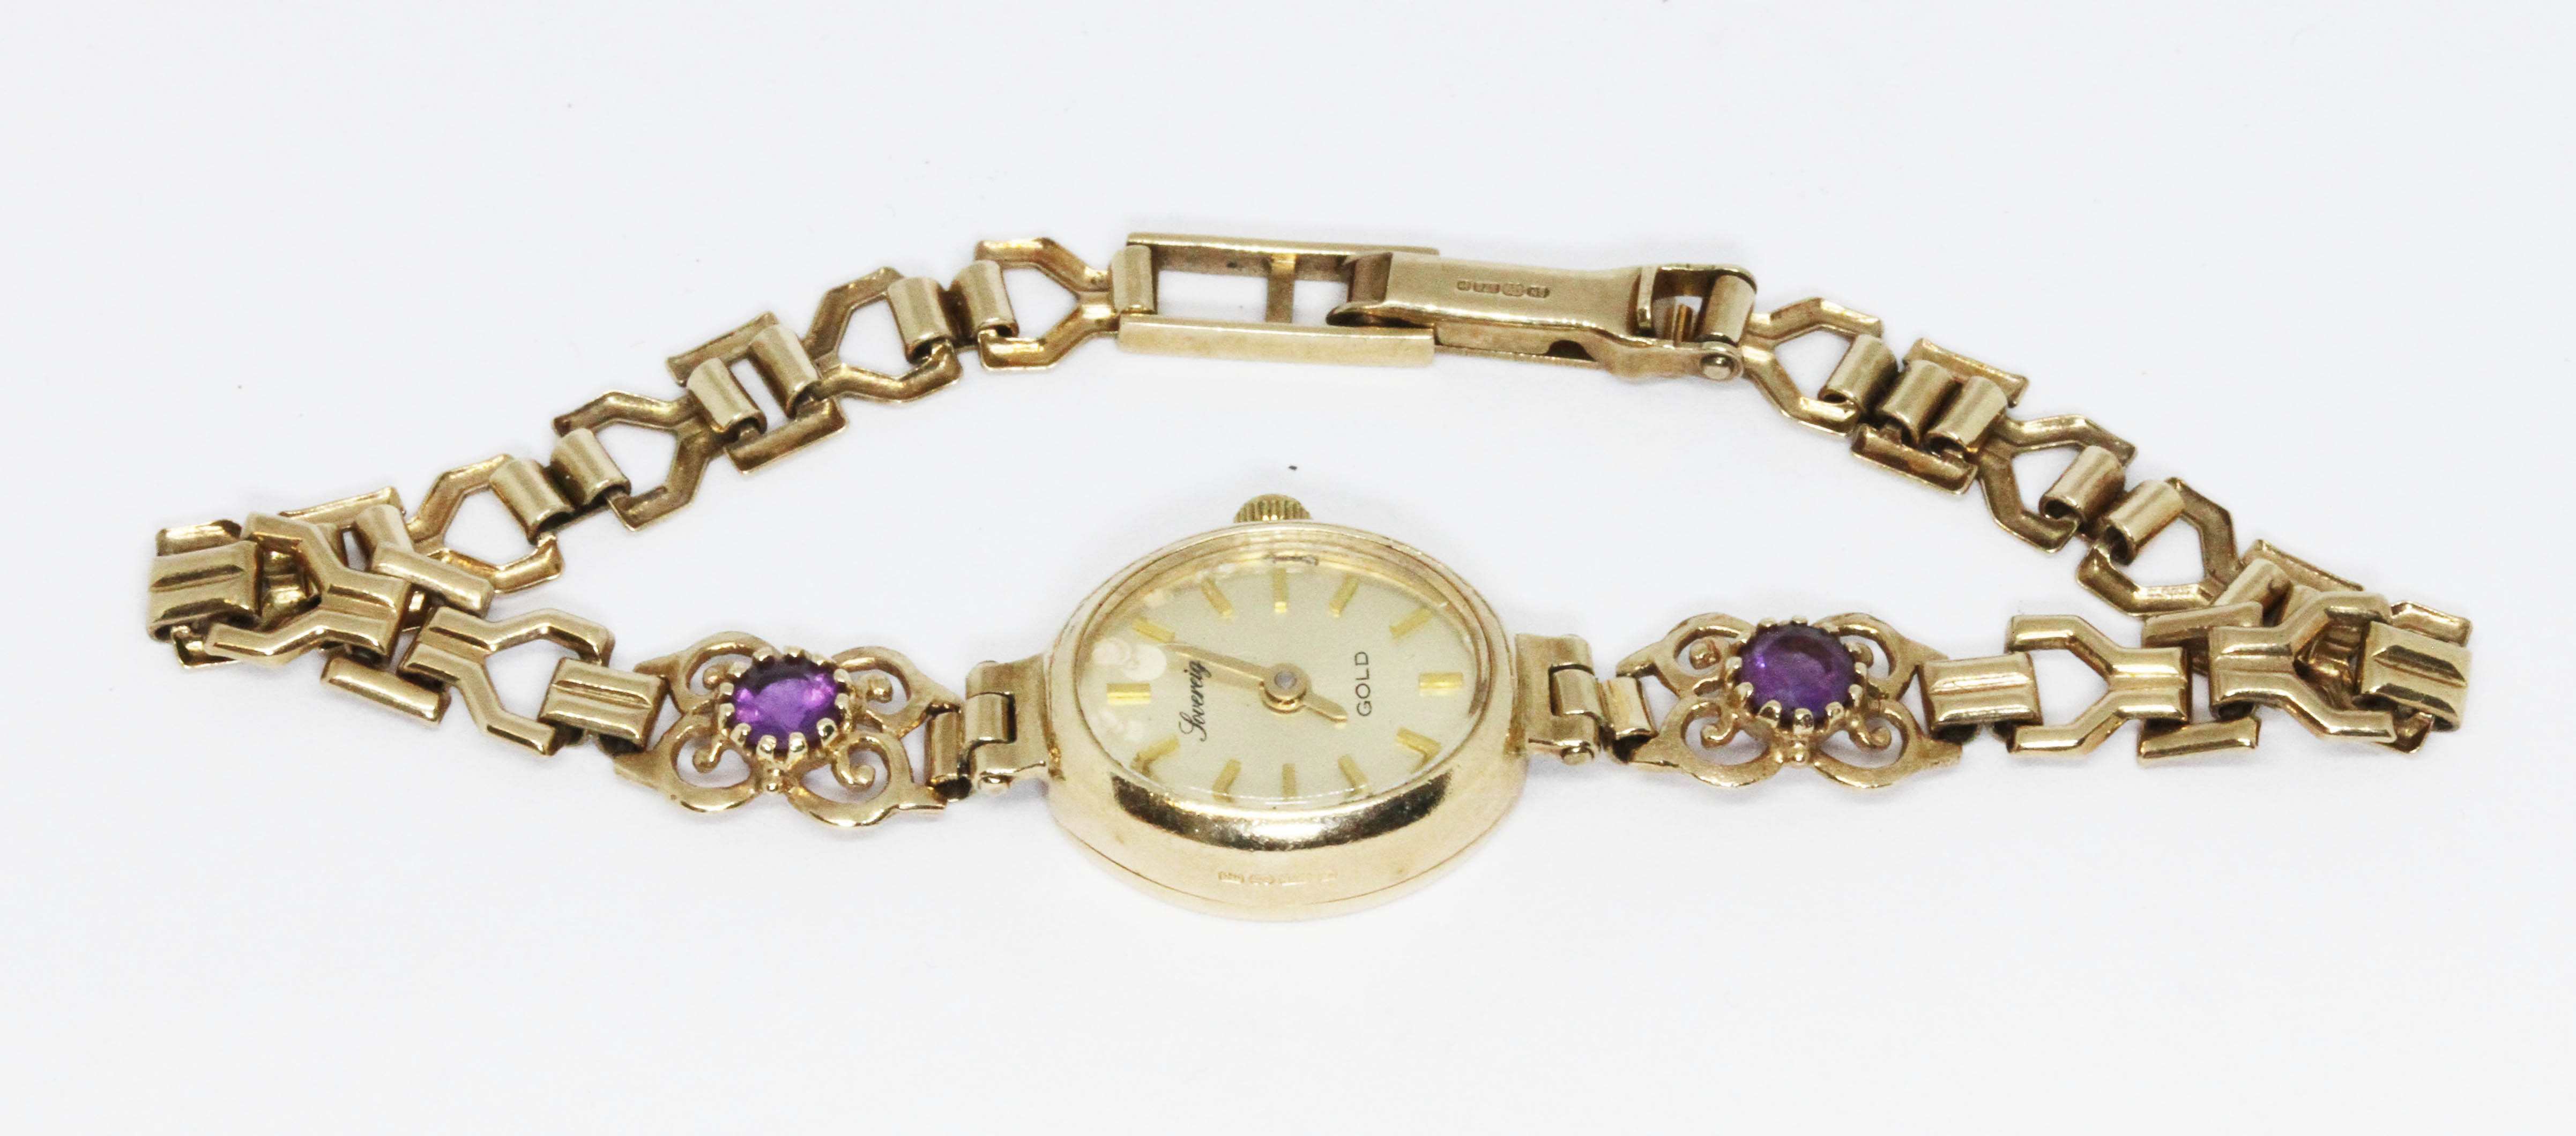 A hallmarked 9ct gold Sovereign wristwatch, gross weight 9.8g.